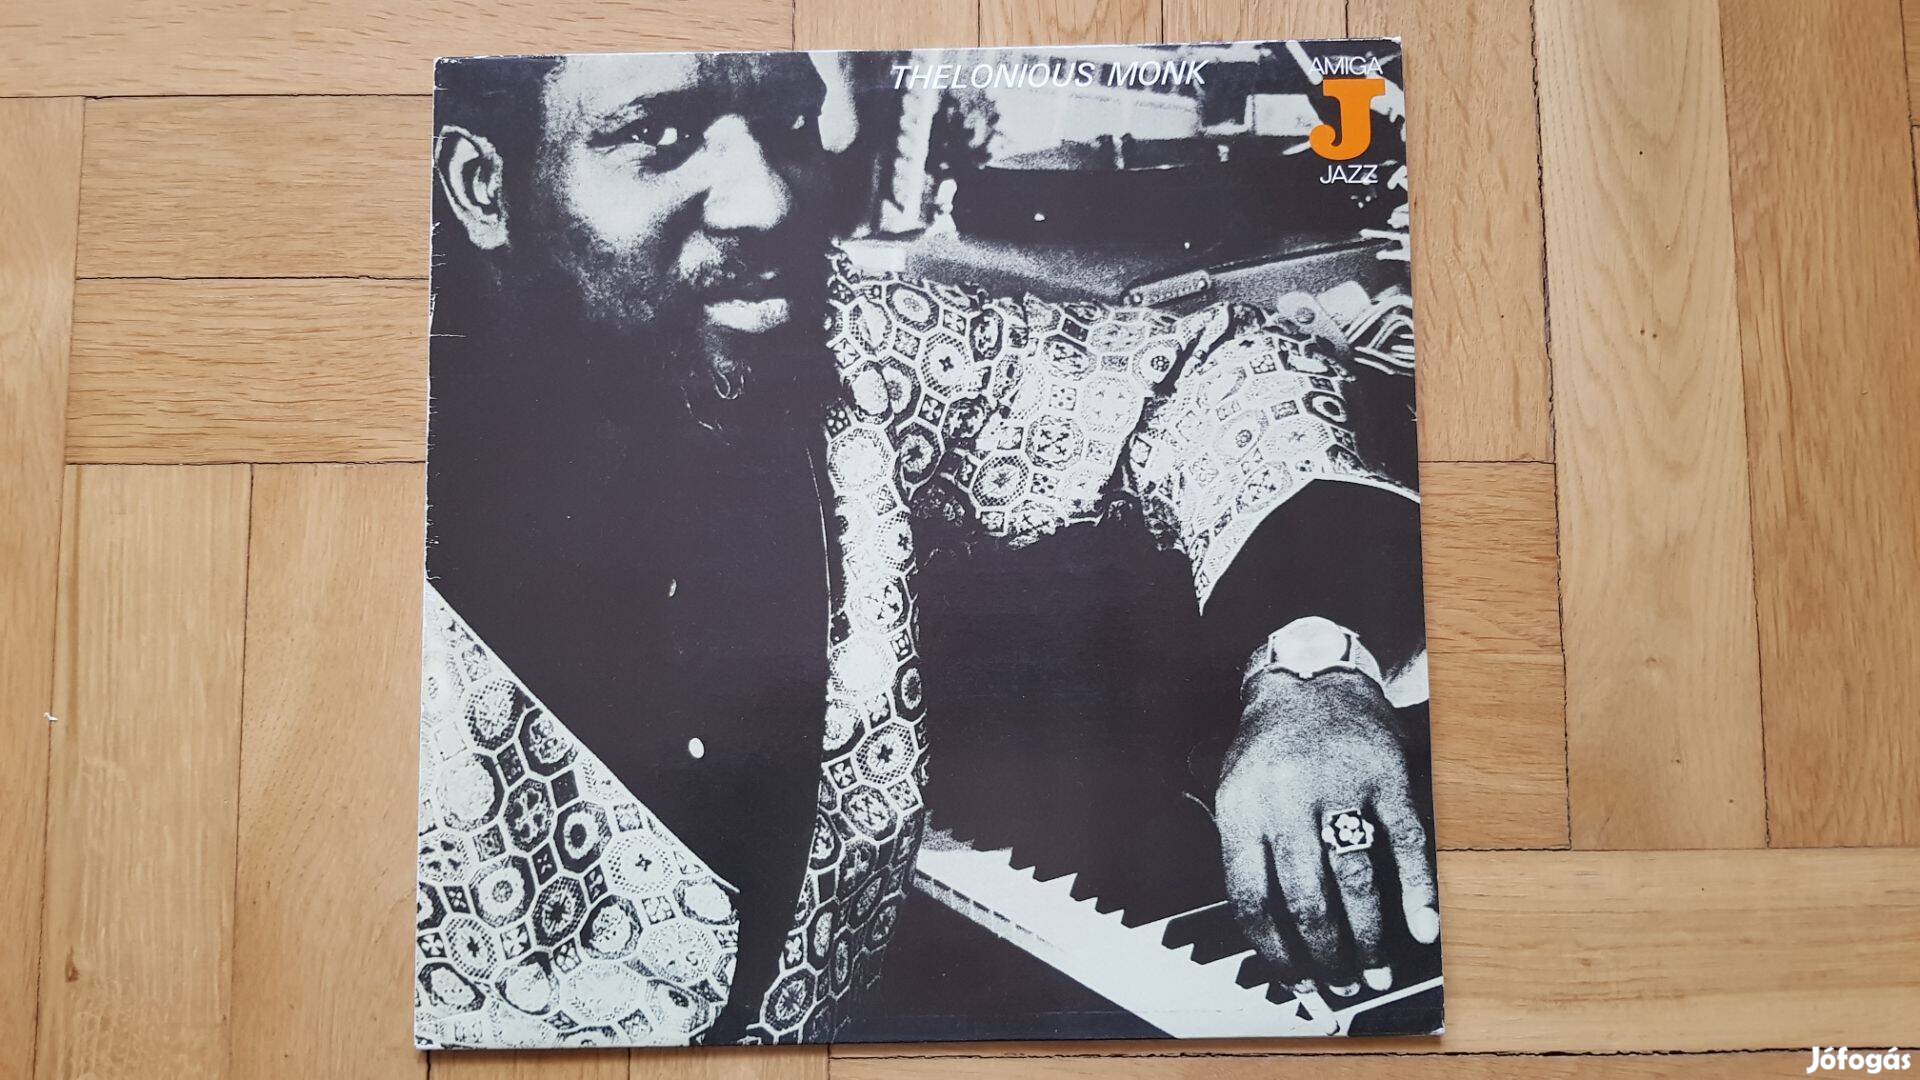 Thelonious Monk LP